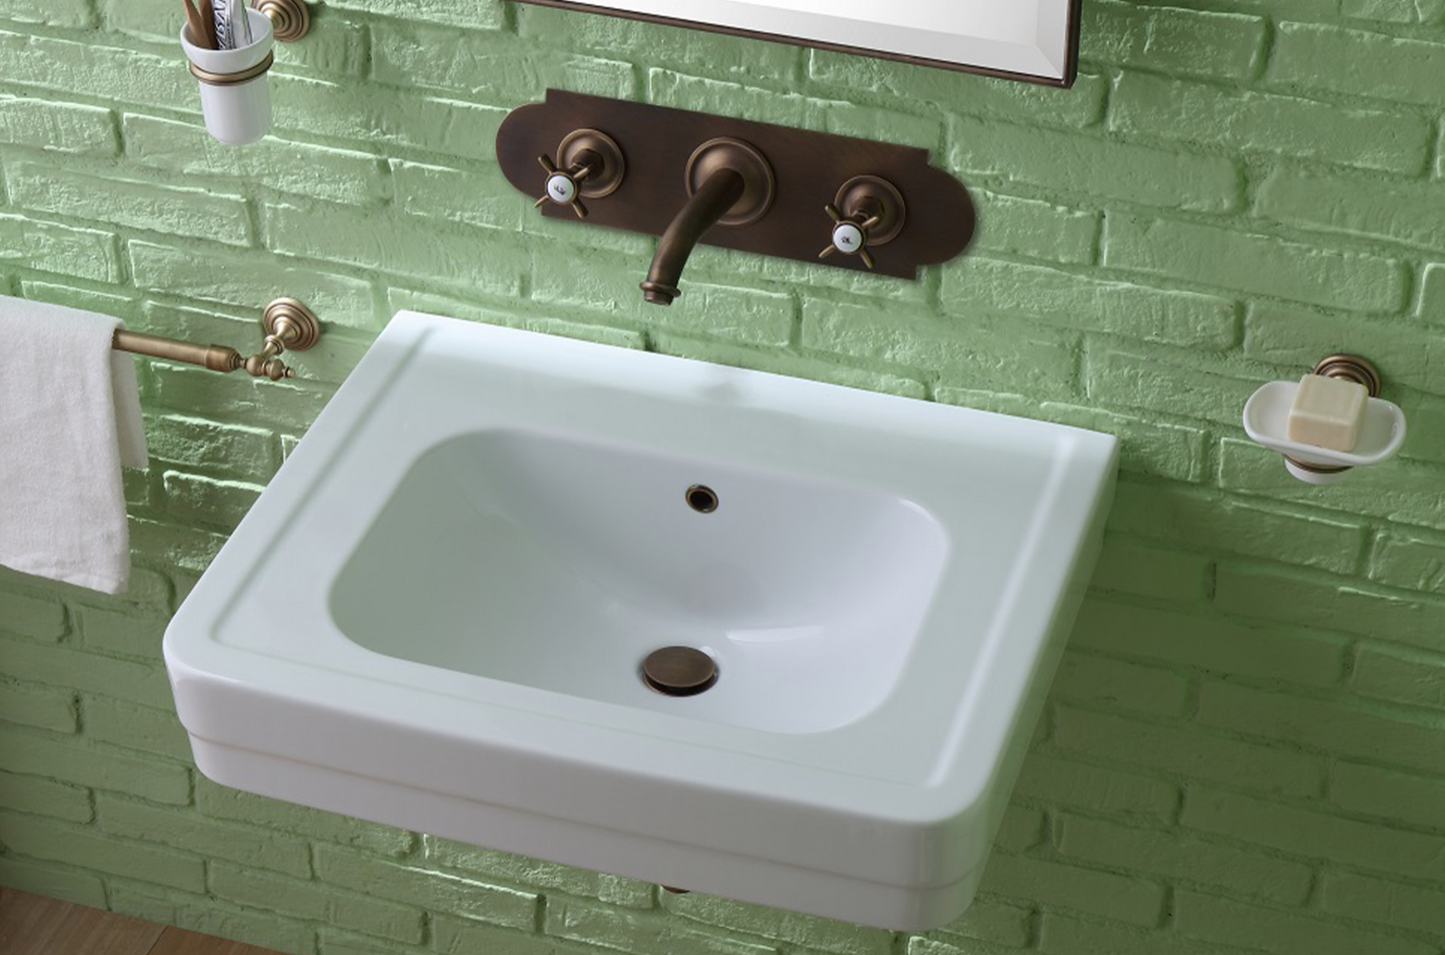 Vintage-style Balneo Toscia plate-mounted washbasin taps